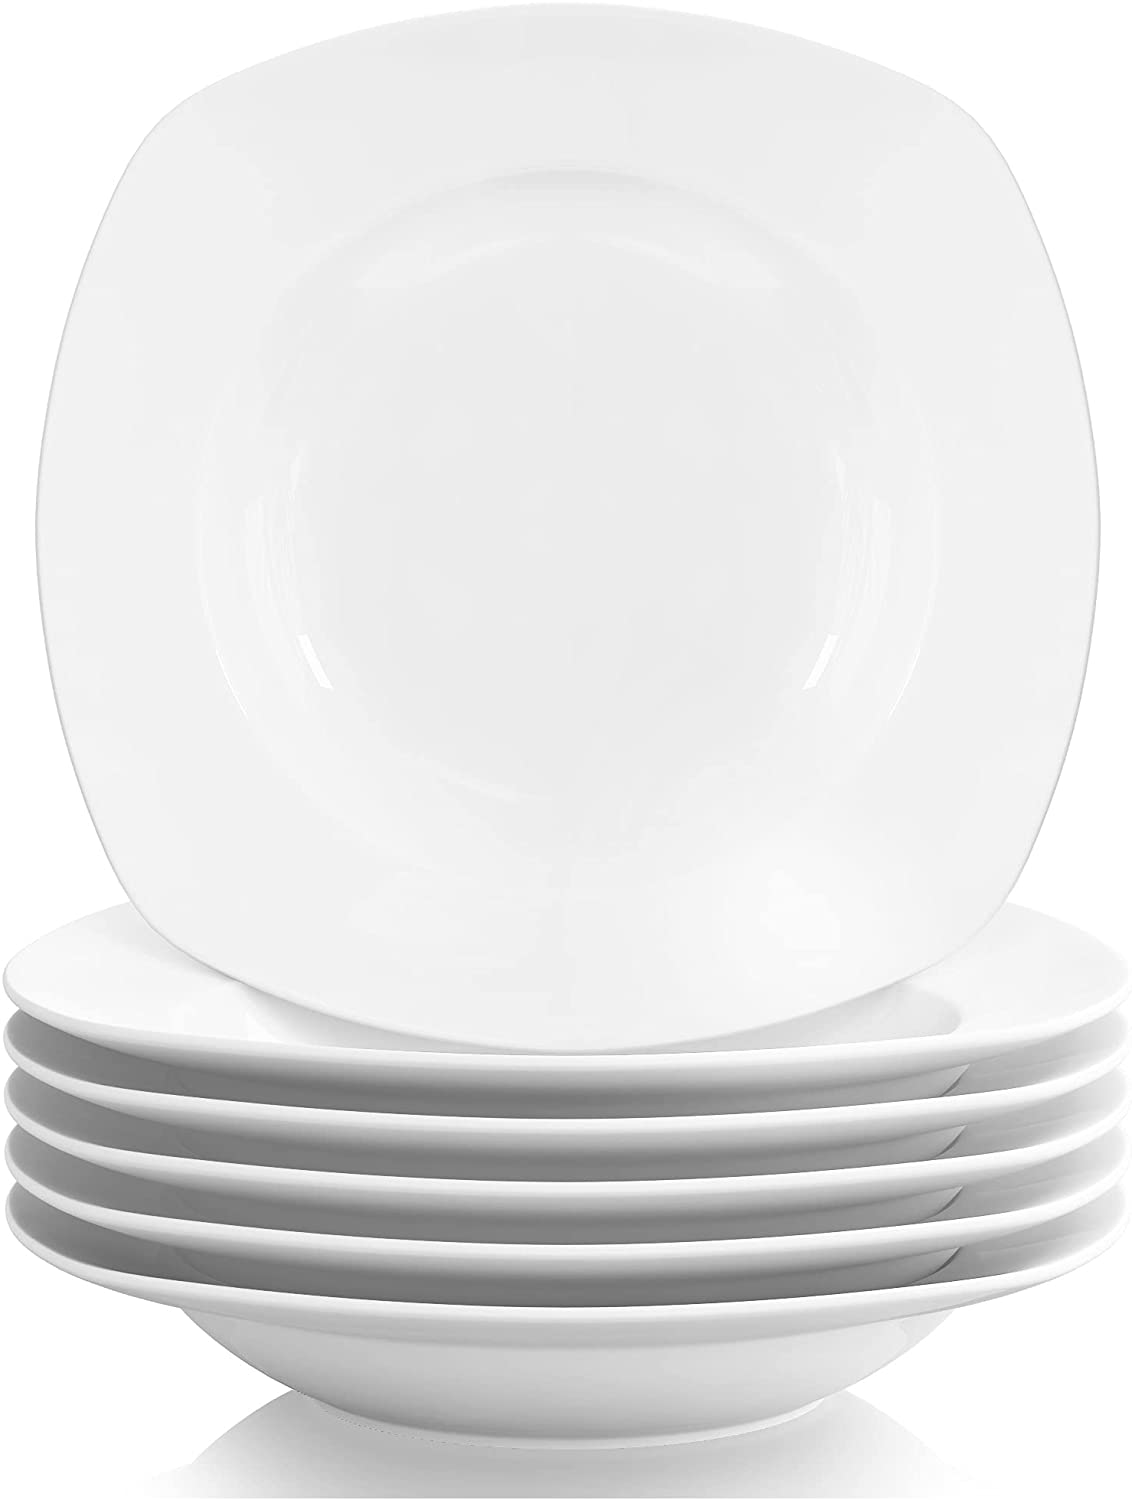 Malacasa Elisa Series, 6-Piece Porcelain Plate Set Dinner Plate Set, Flat Plate 24.6 cm for 6 People